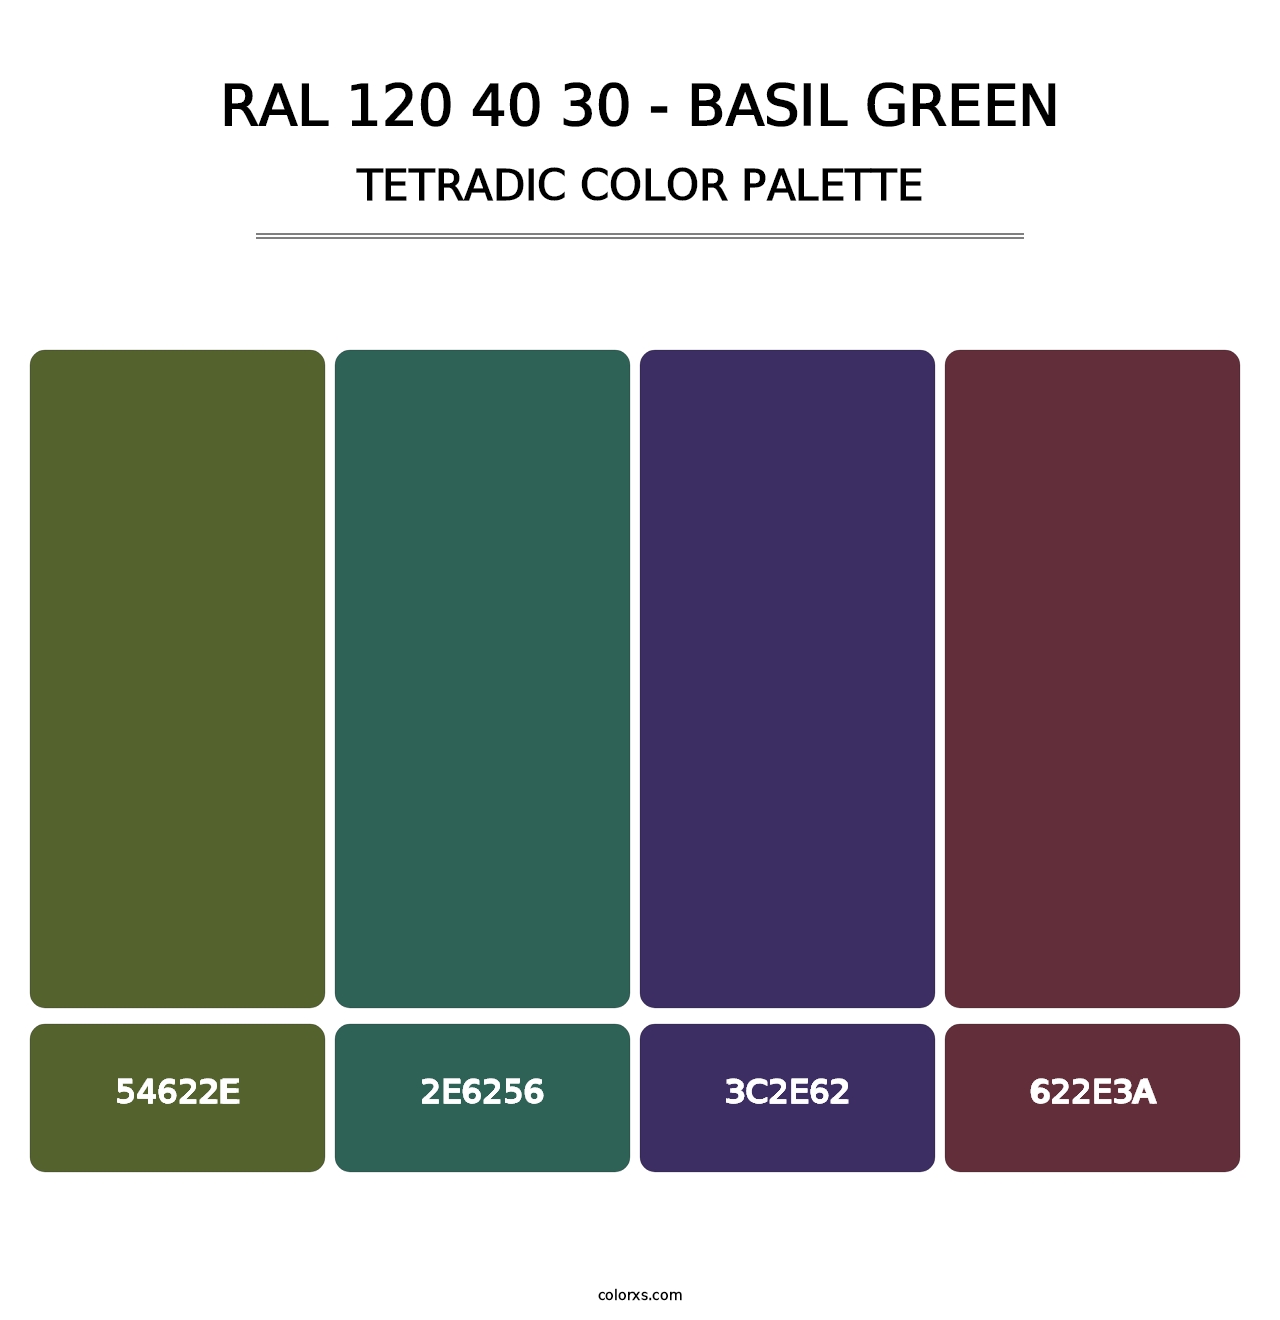 RAL 120 40 30 - Basil Green - Tetradic Color Palette